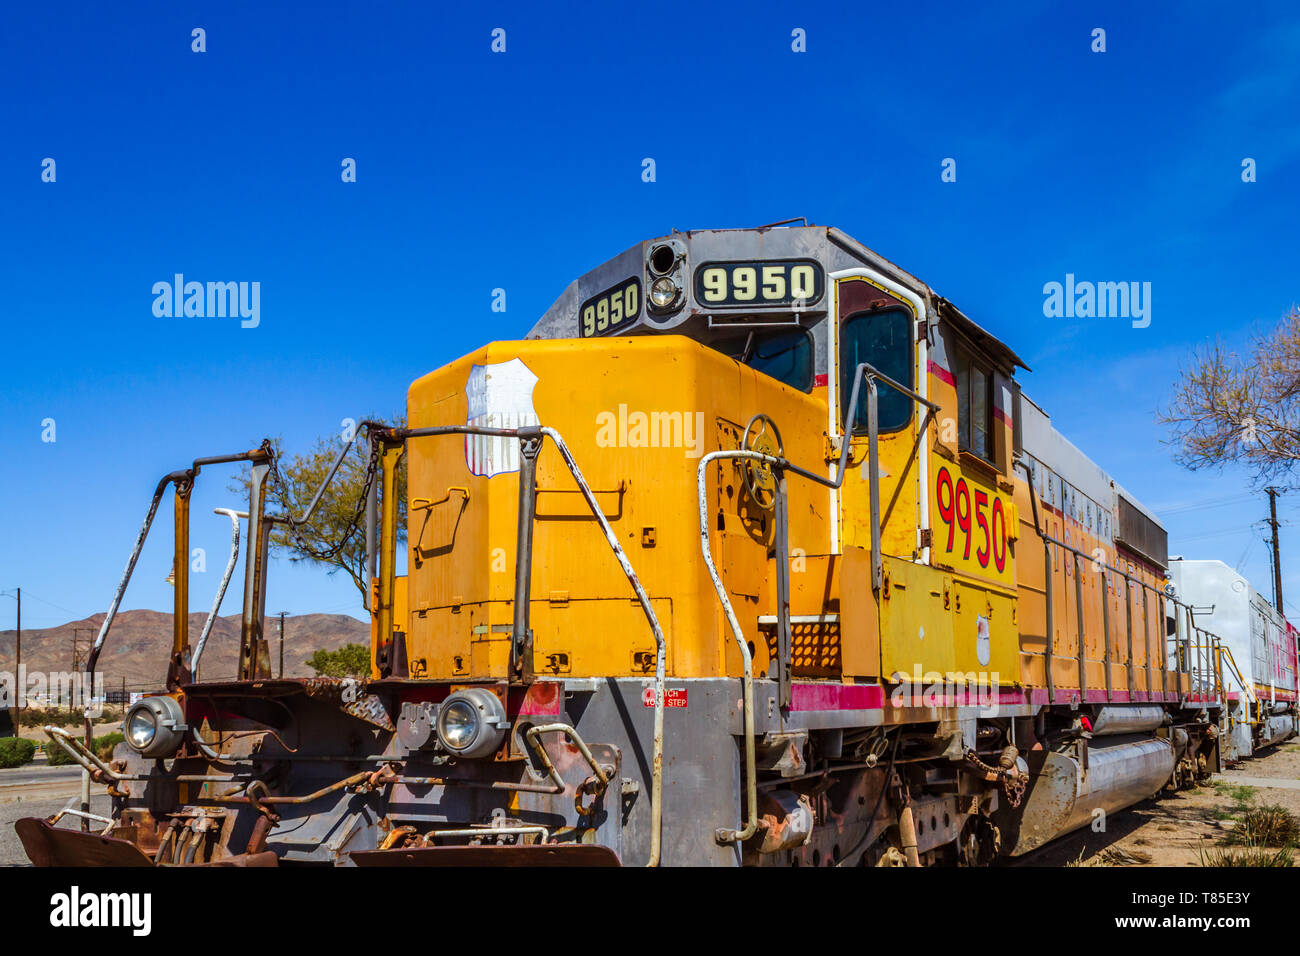 Barstow, CA/USA - 14. April 2019: Union Pacific Railroad motor Nummer 9950 am westlichen Nordamerika Railroad Museum am Barstow Harvey Hou entfernt Stockfoto